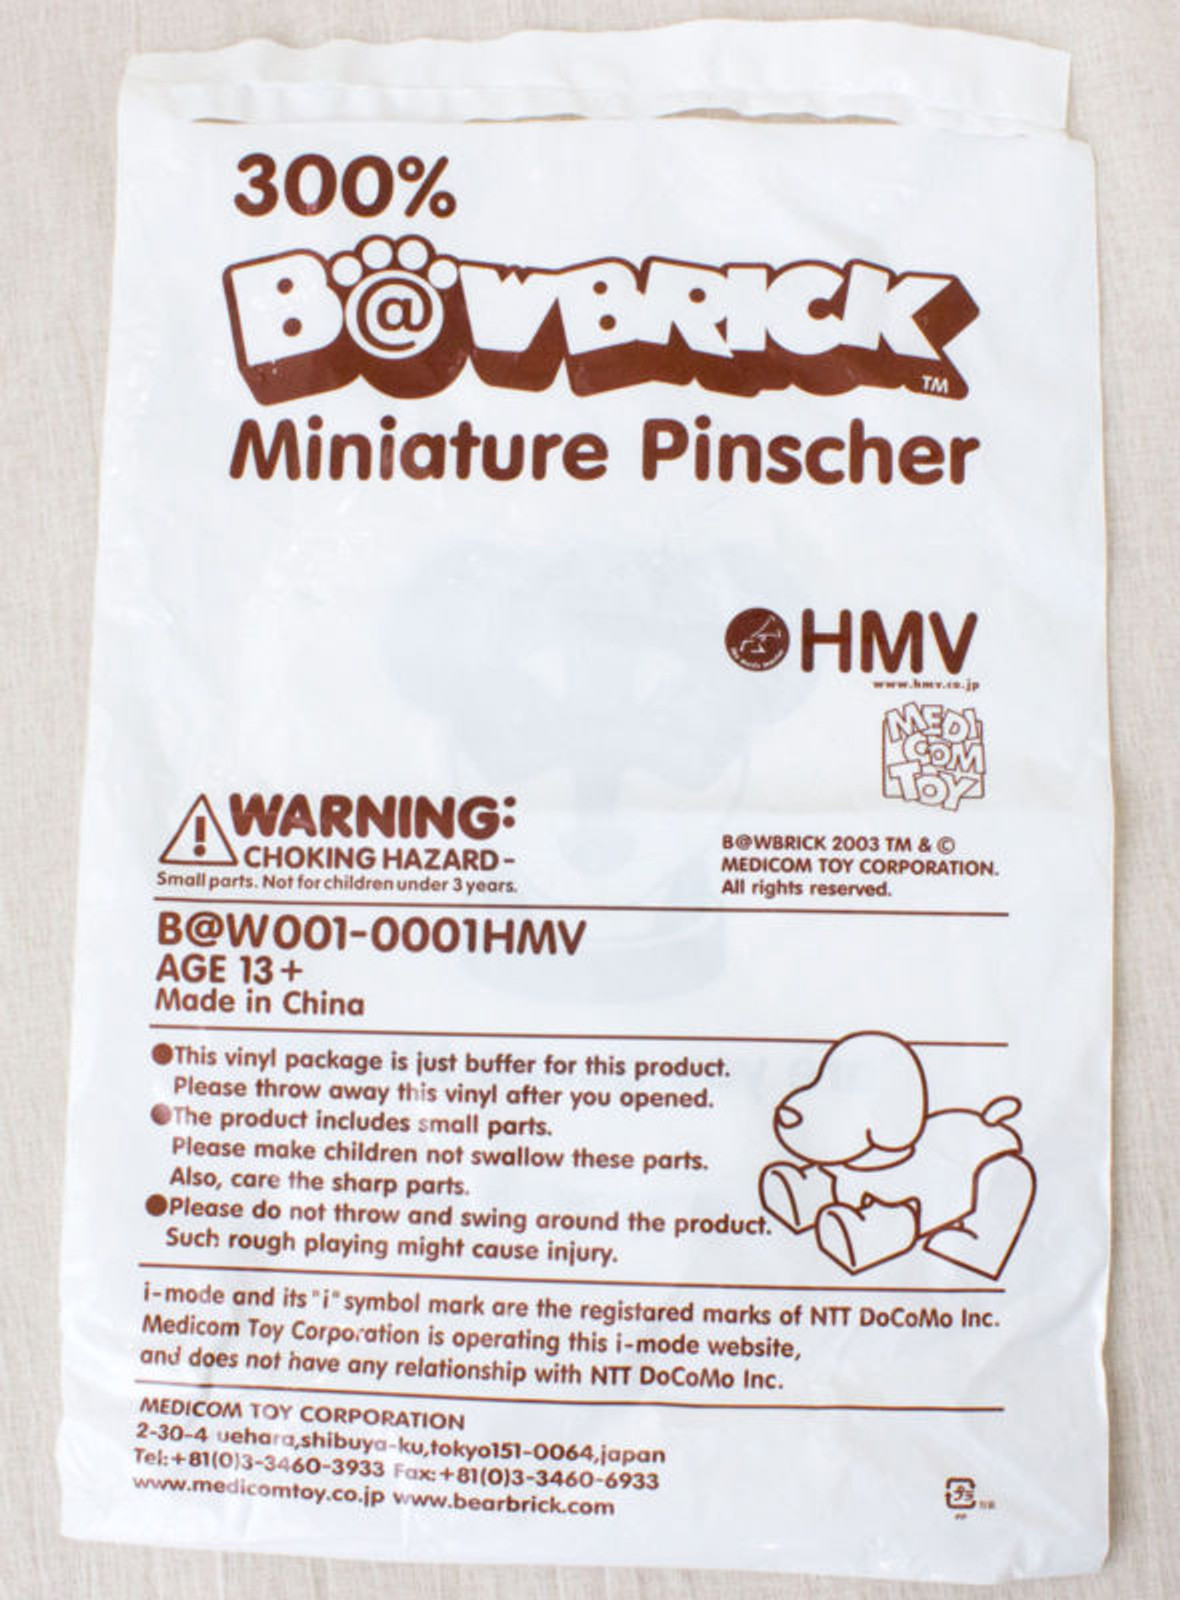 B@WBRICK Bowbrick Miniature Pinscher 300% HMV limited Medicom Toy JAPAN